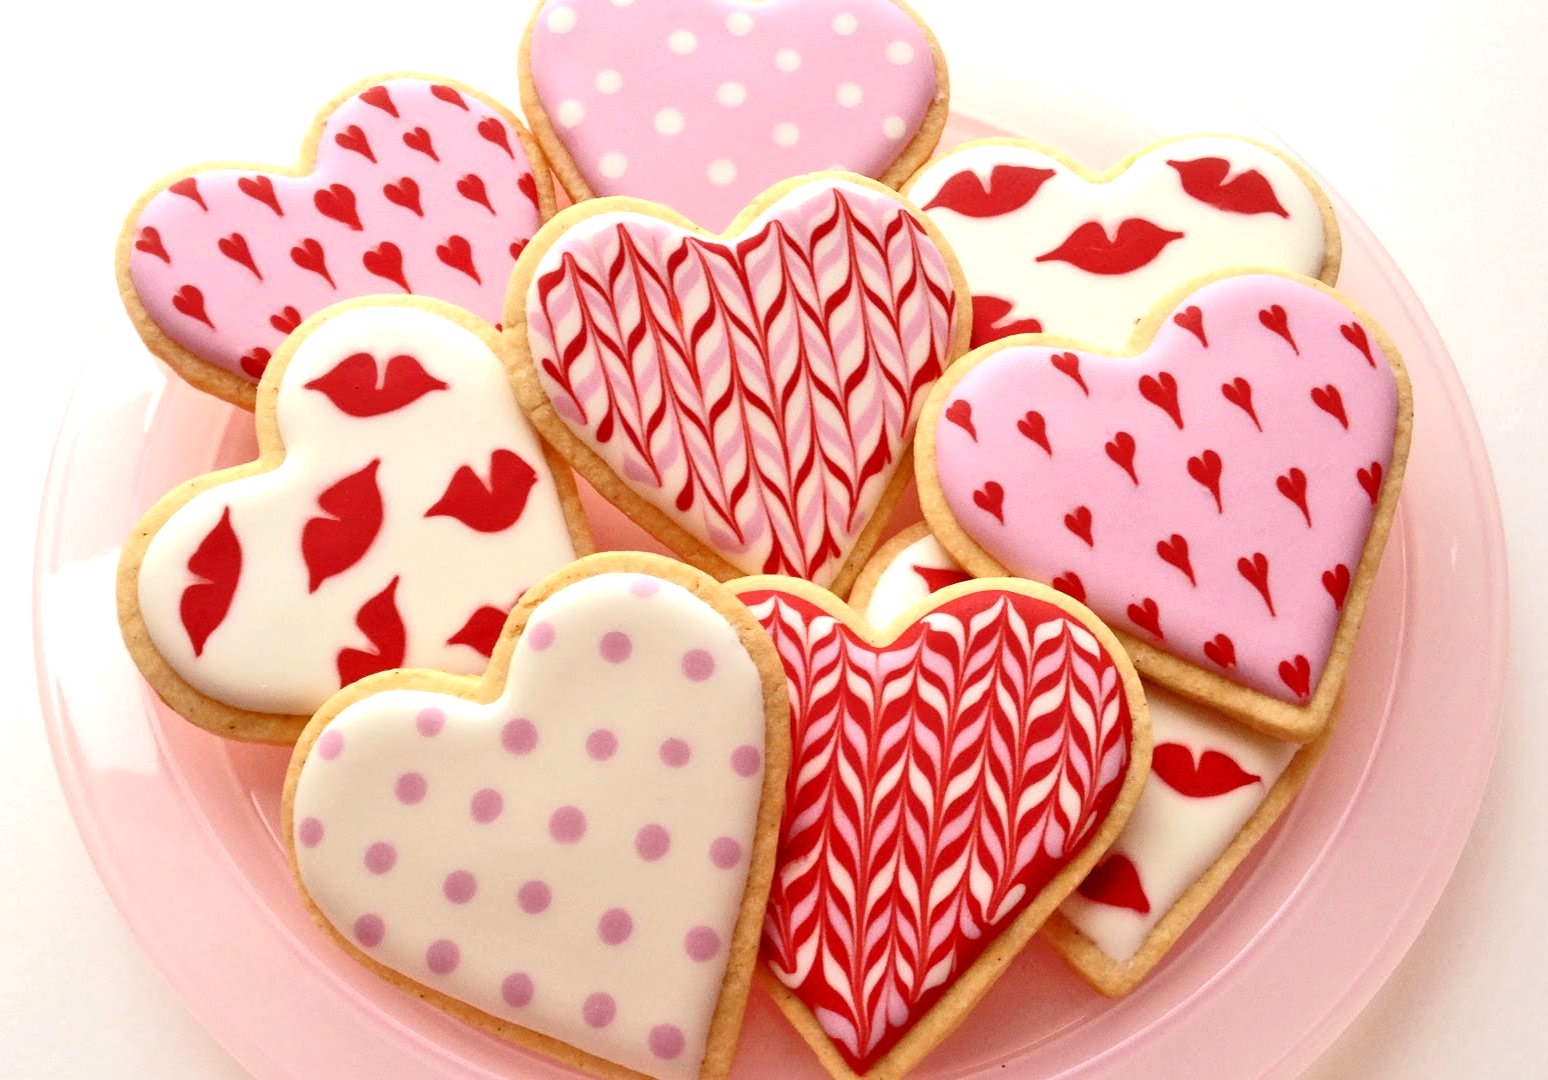 Valentine Cookies Google image from https://i.ytimg.com/vi/XDVMKgjCJDk/maxresdefault.jpg